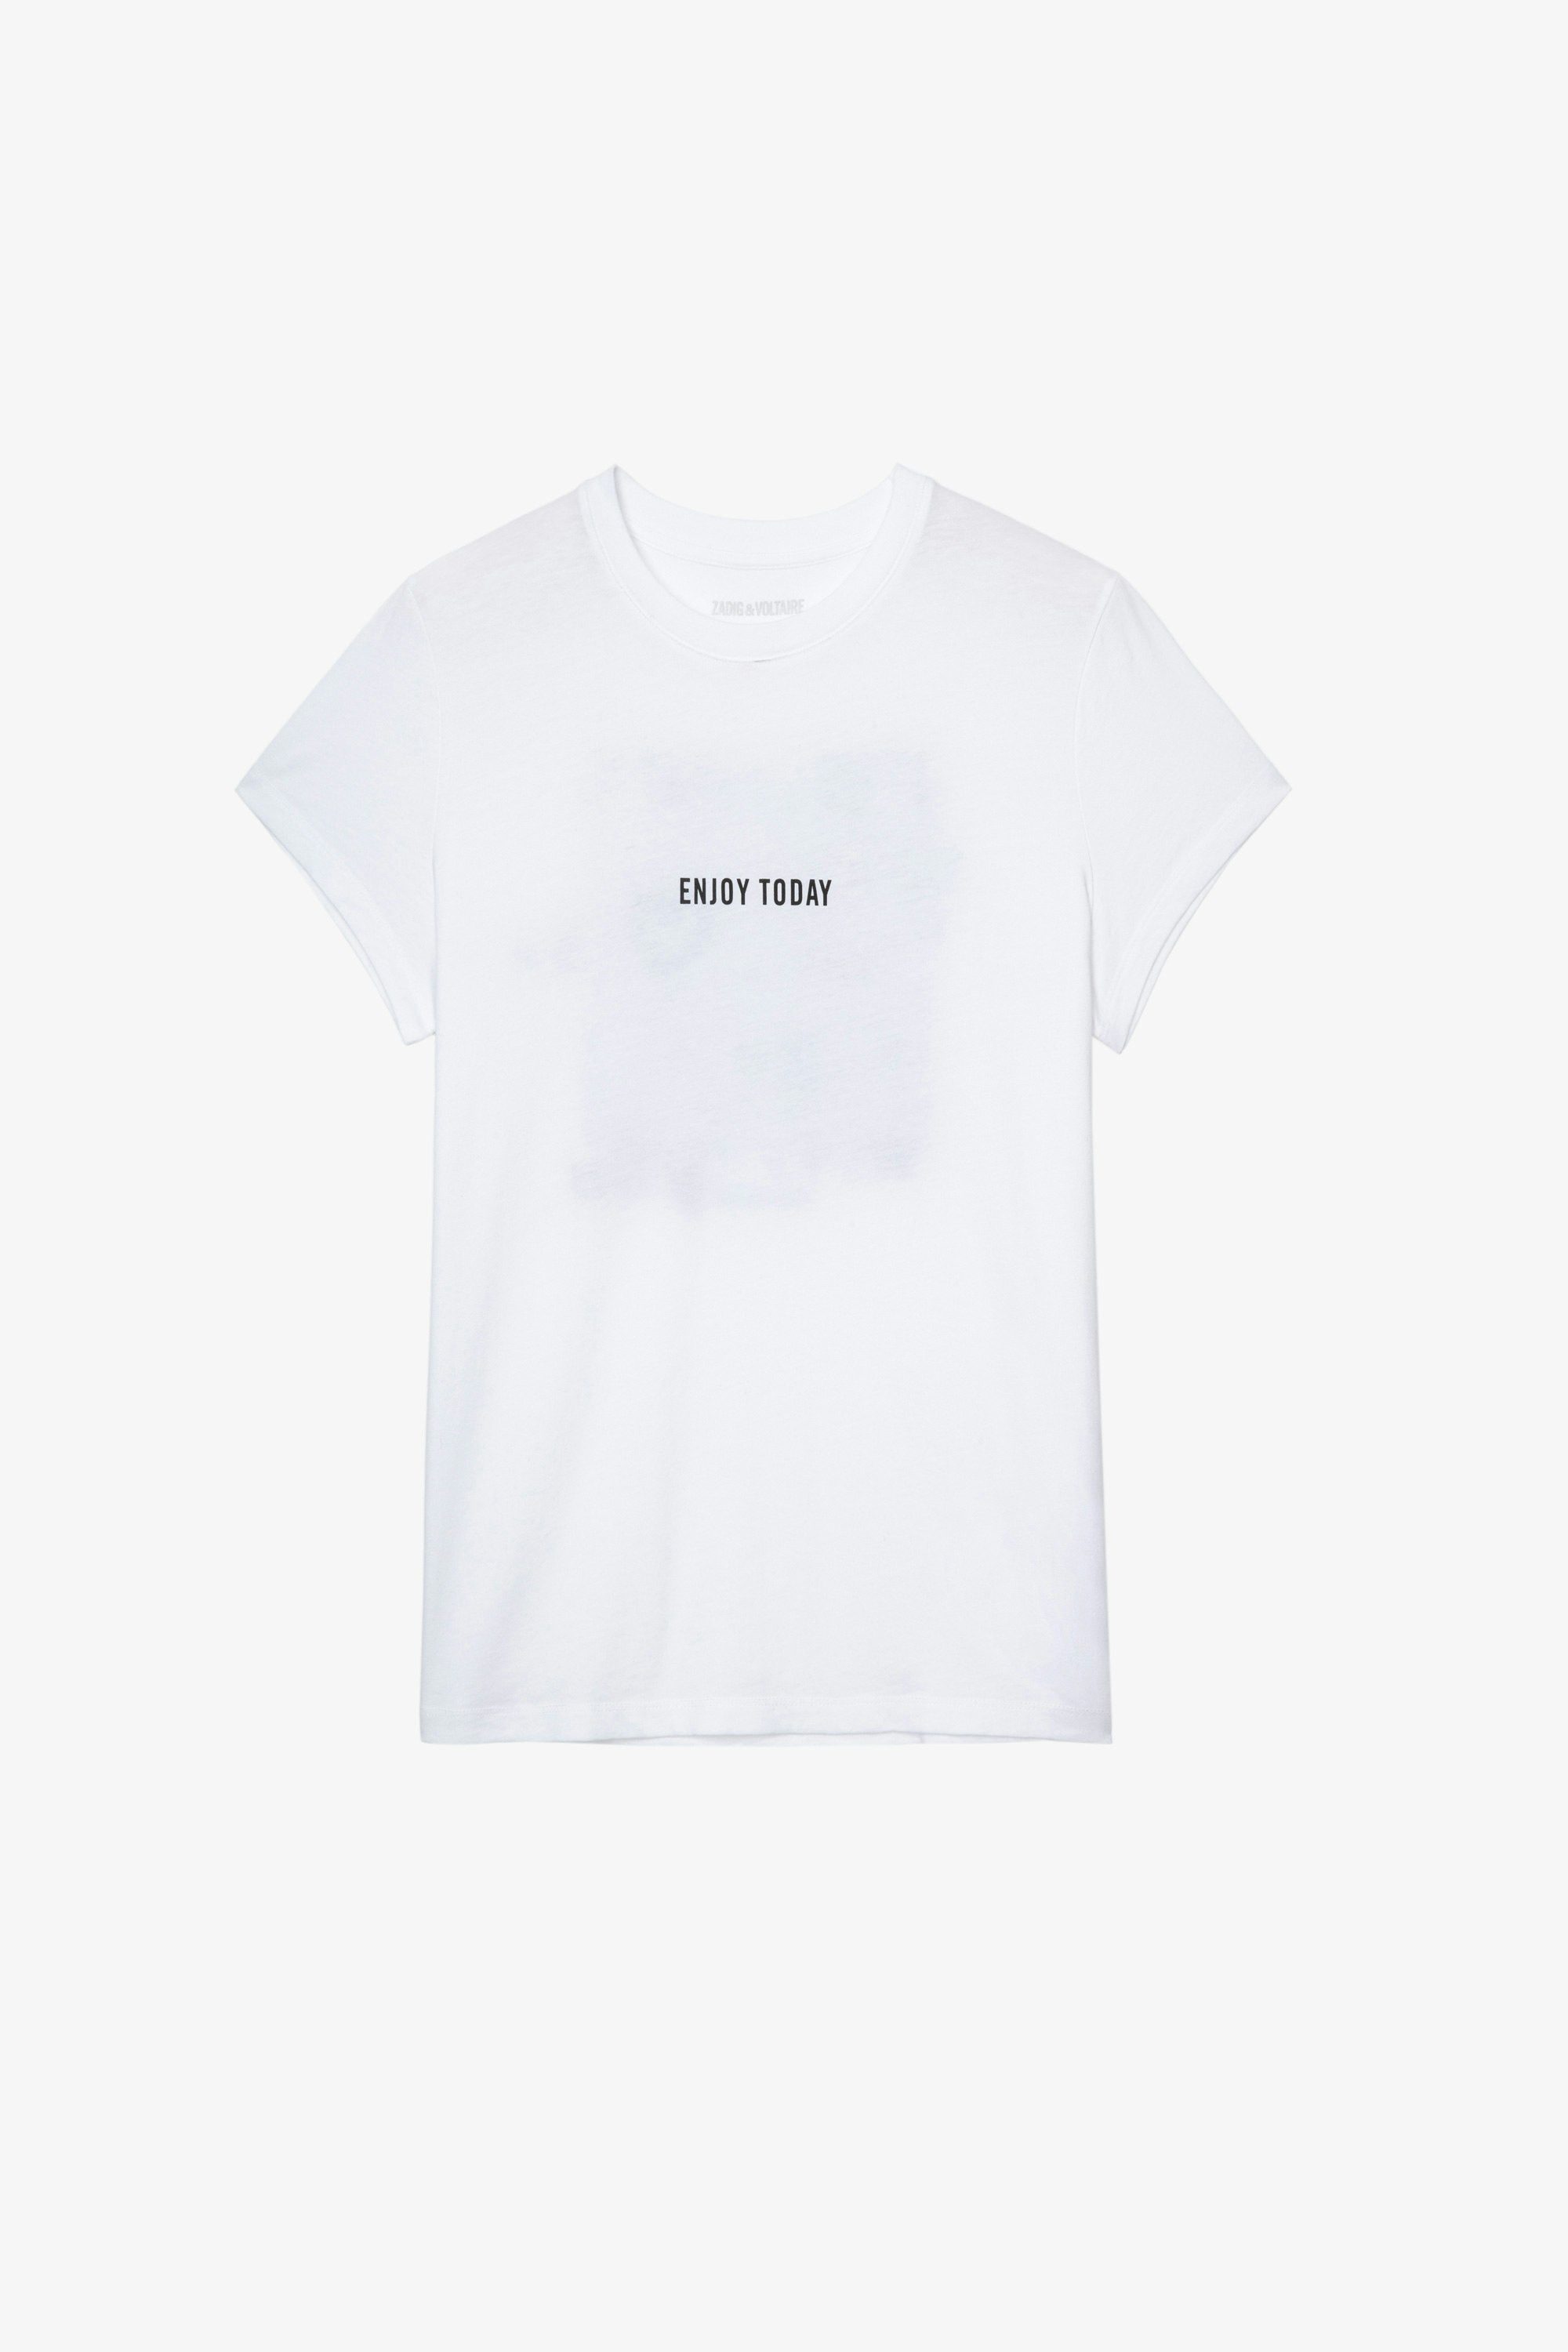 Camiseta Zoe Photoprint Camiseta blanca de algodón «Enjoy Today» para mujer